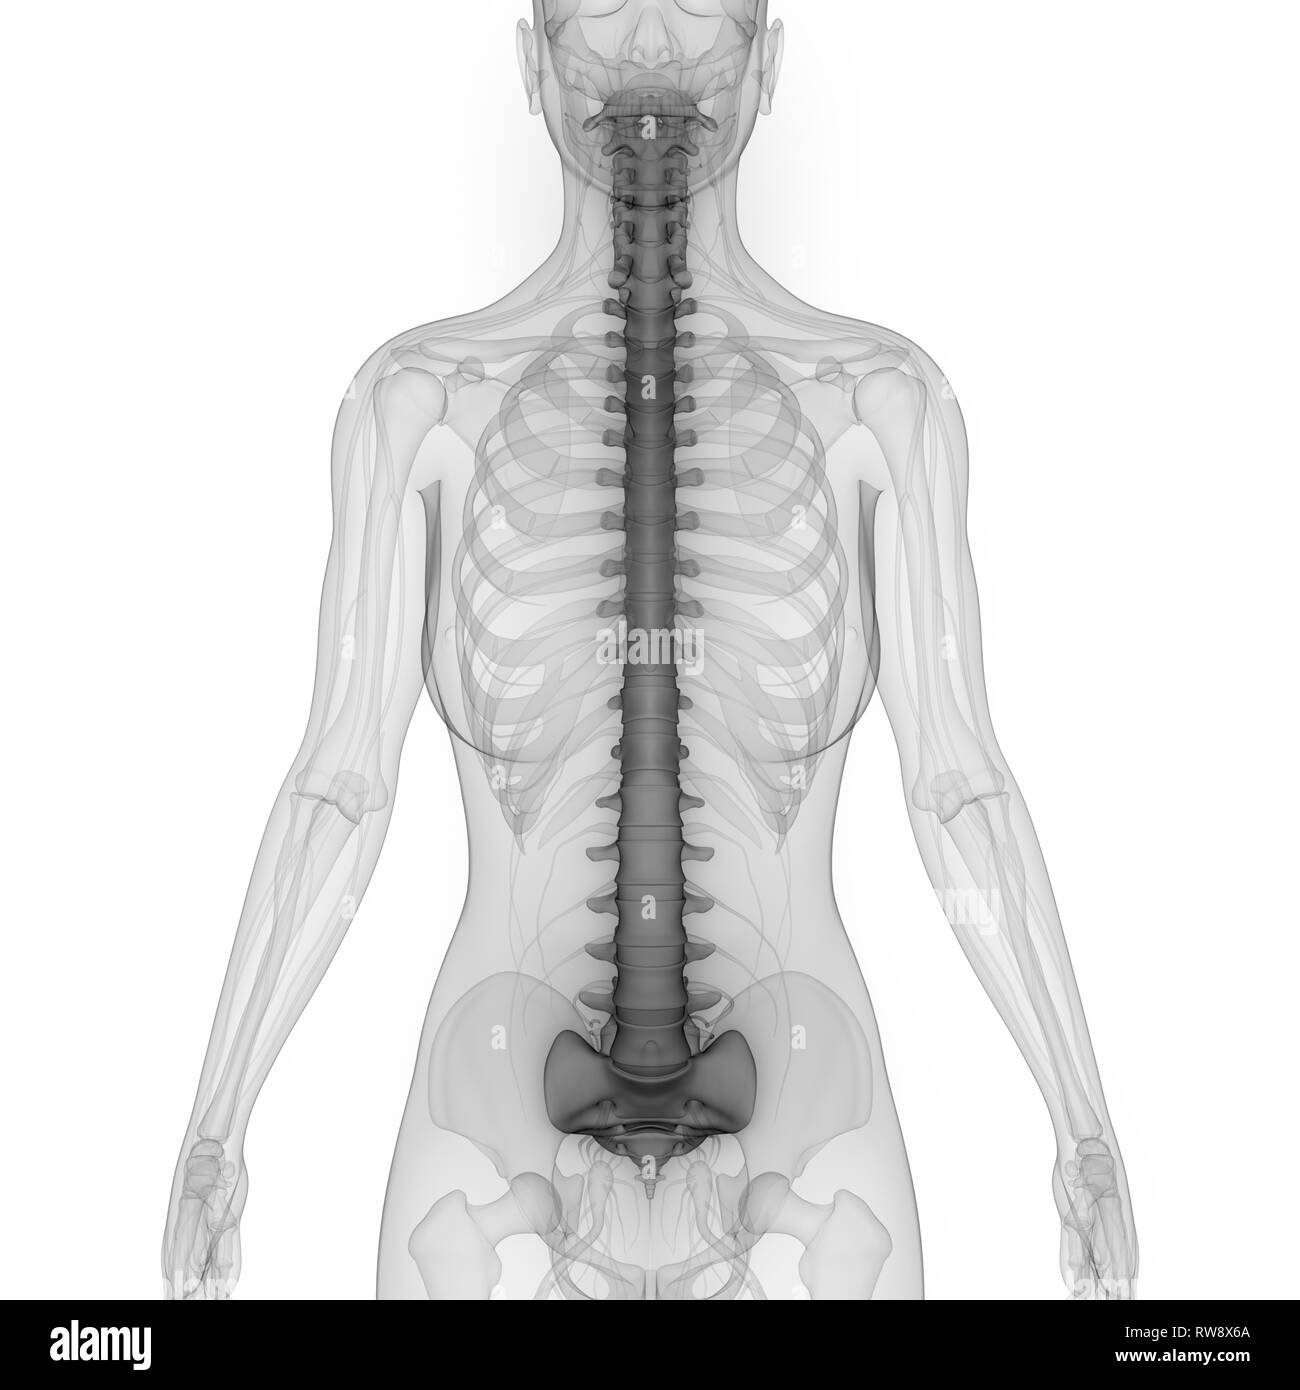 Human Skeleton System Vertebral Column Anatomy Stock Photo